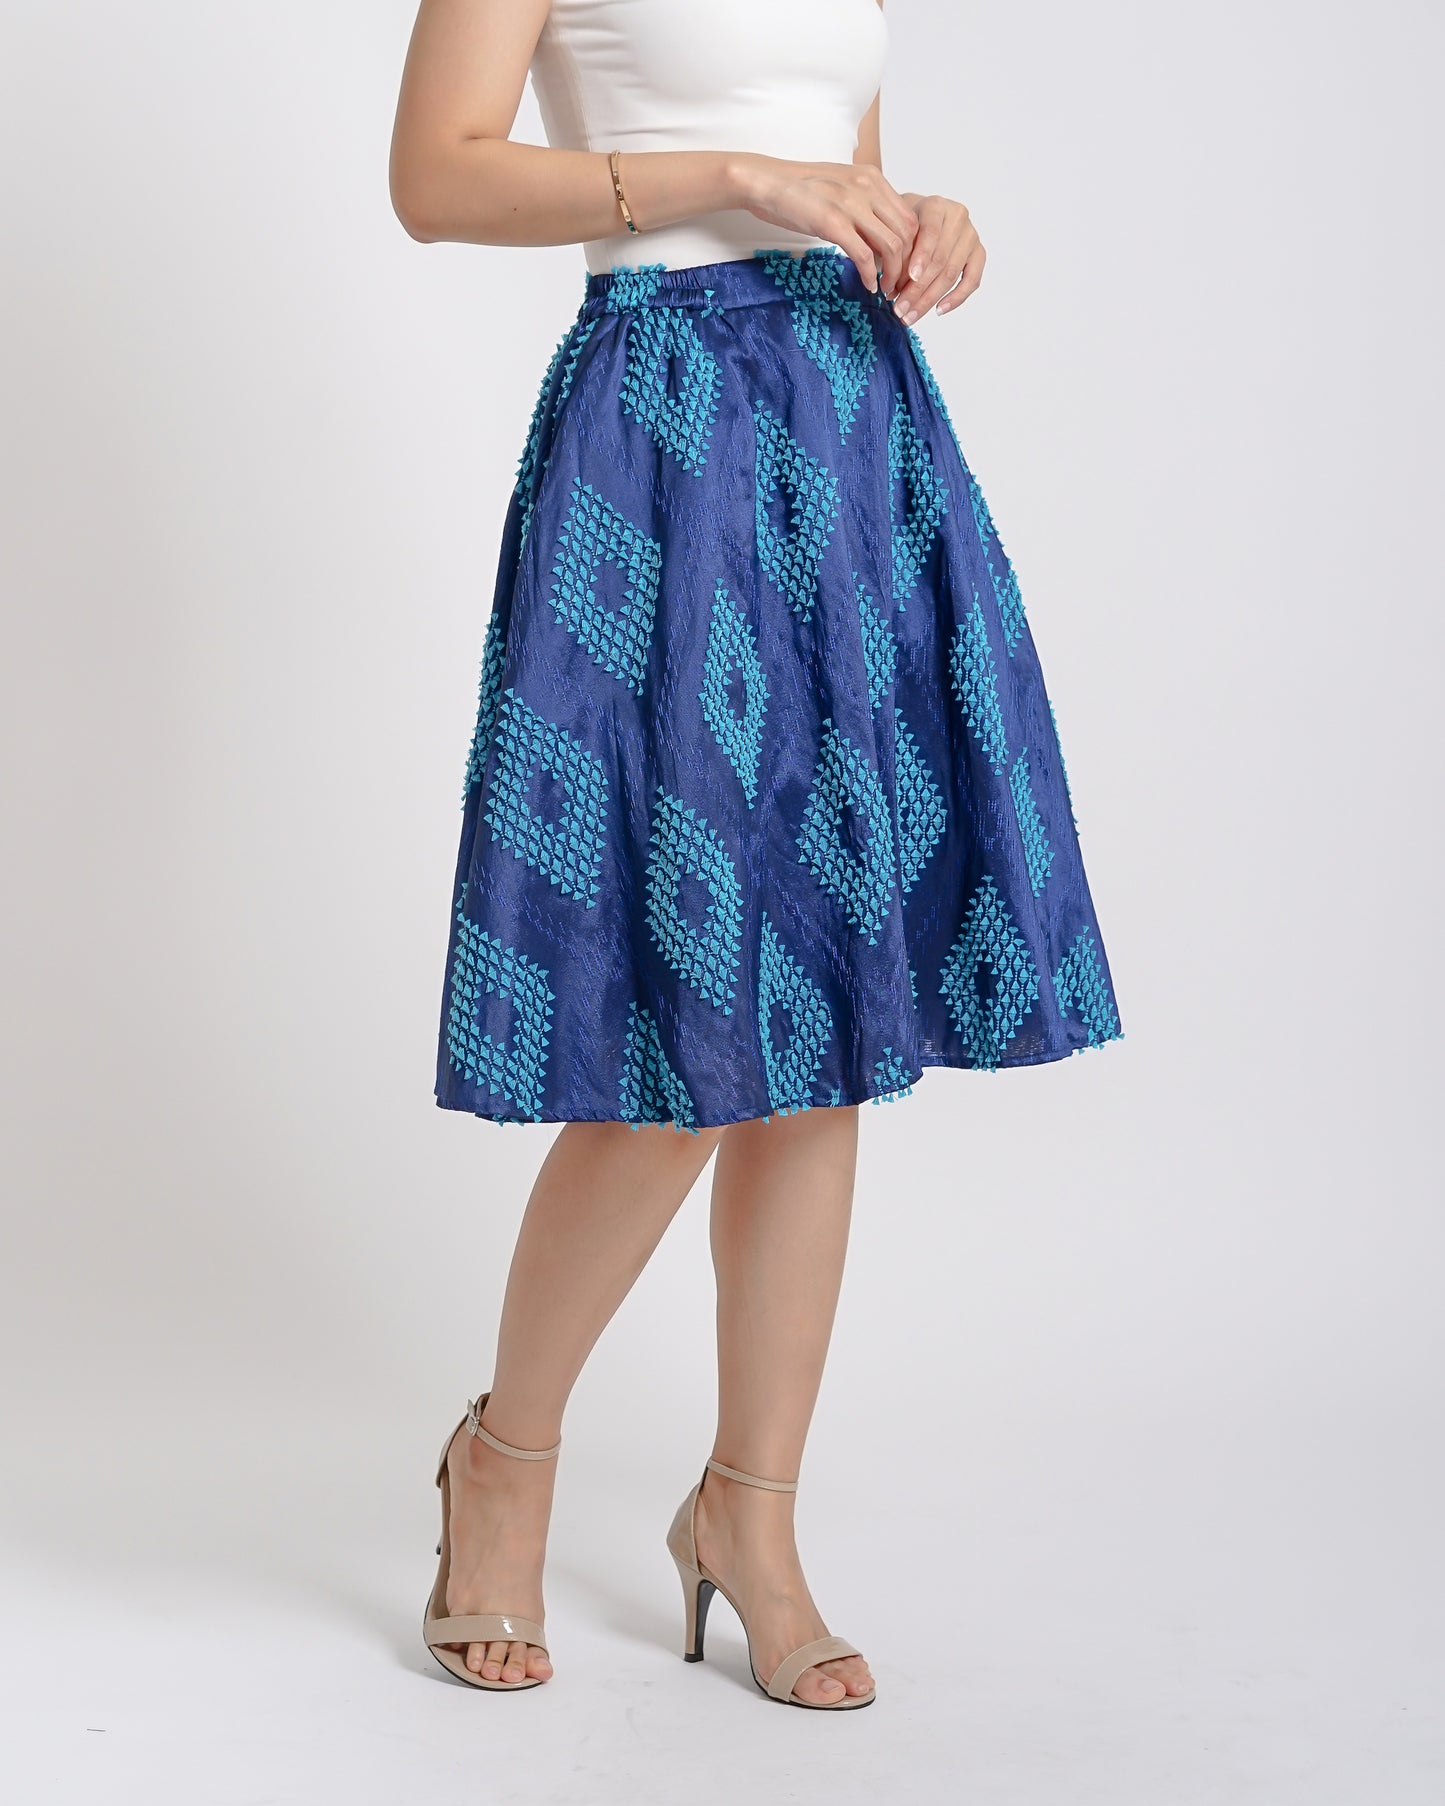 Vivienne A-Line tenun skirt blue turquoise